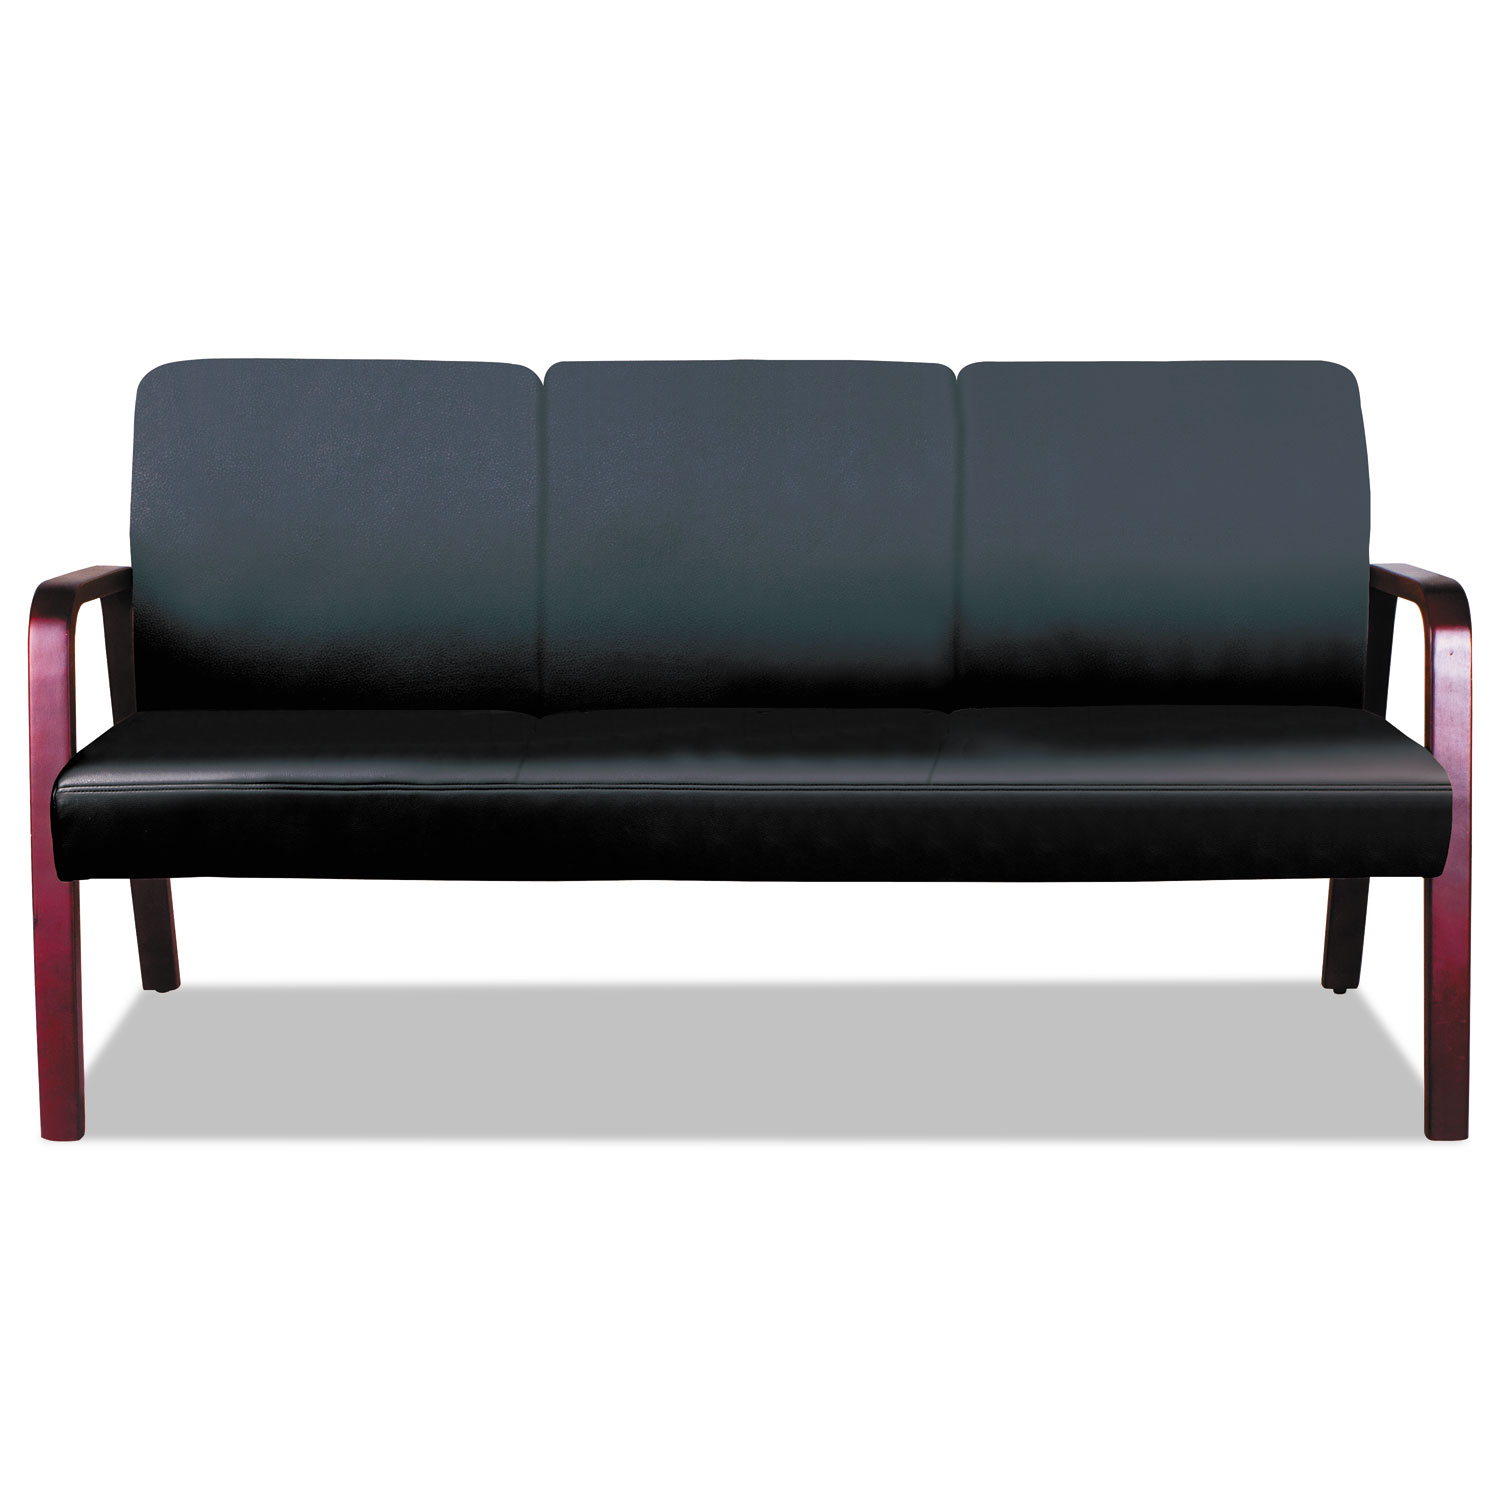 Alera Reception Lounge WL 3-Seat Sofa, 65.75 x 26 1/8 x 33, Black/Mahogany